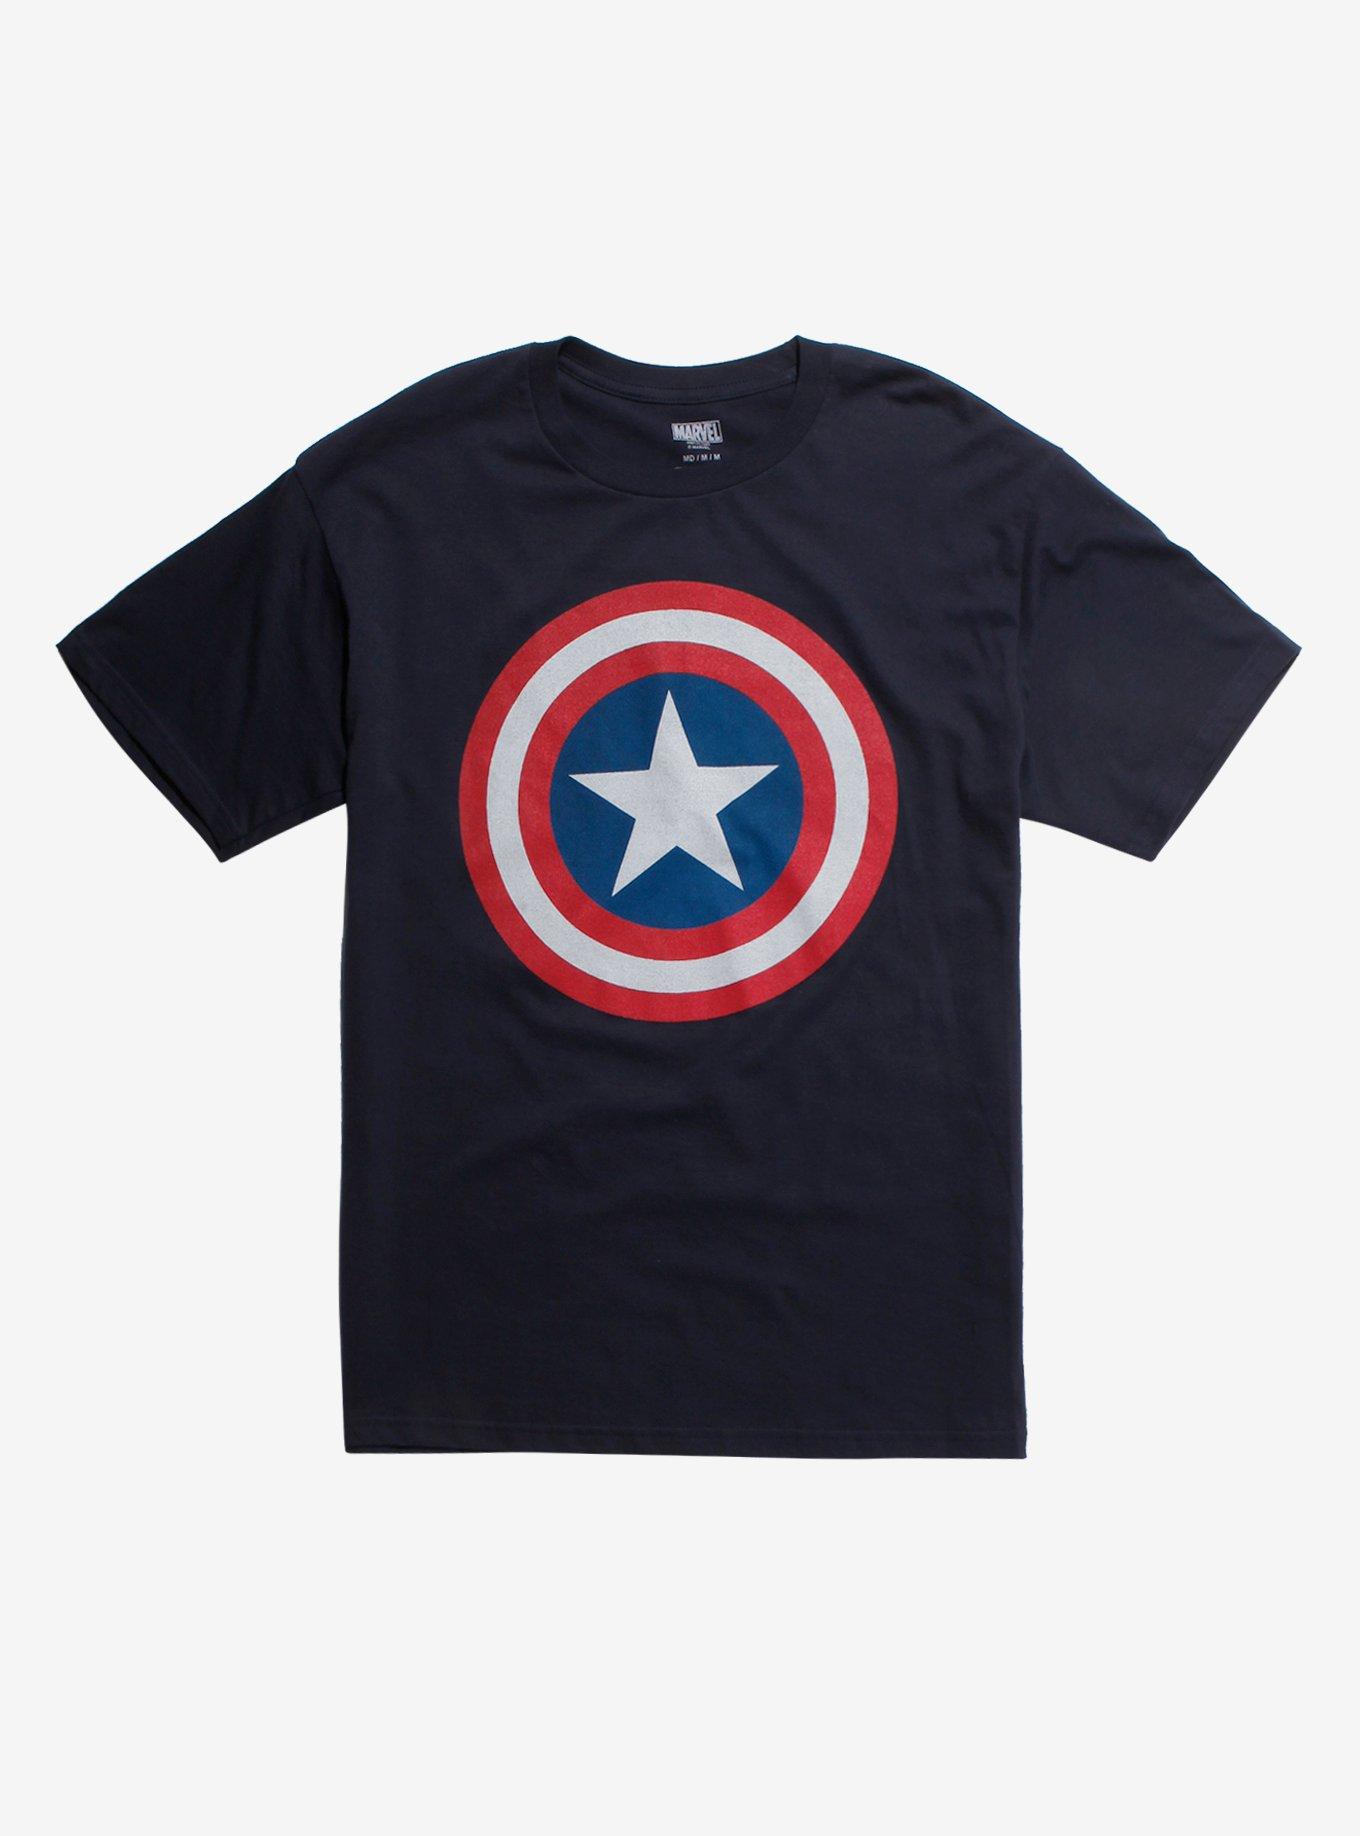 New Marvel Captain America Full body T-Shirt NWT  XL 